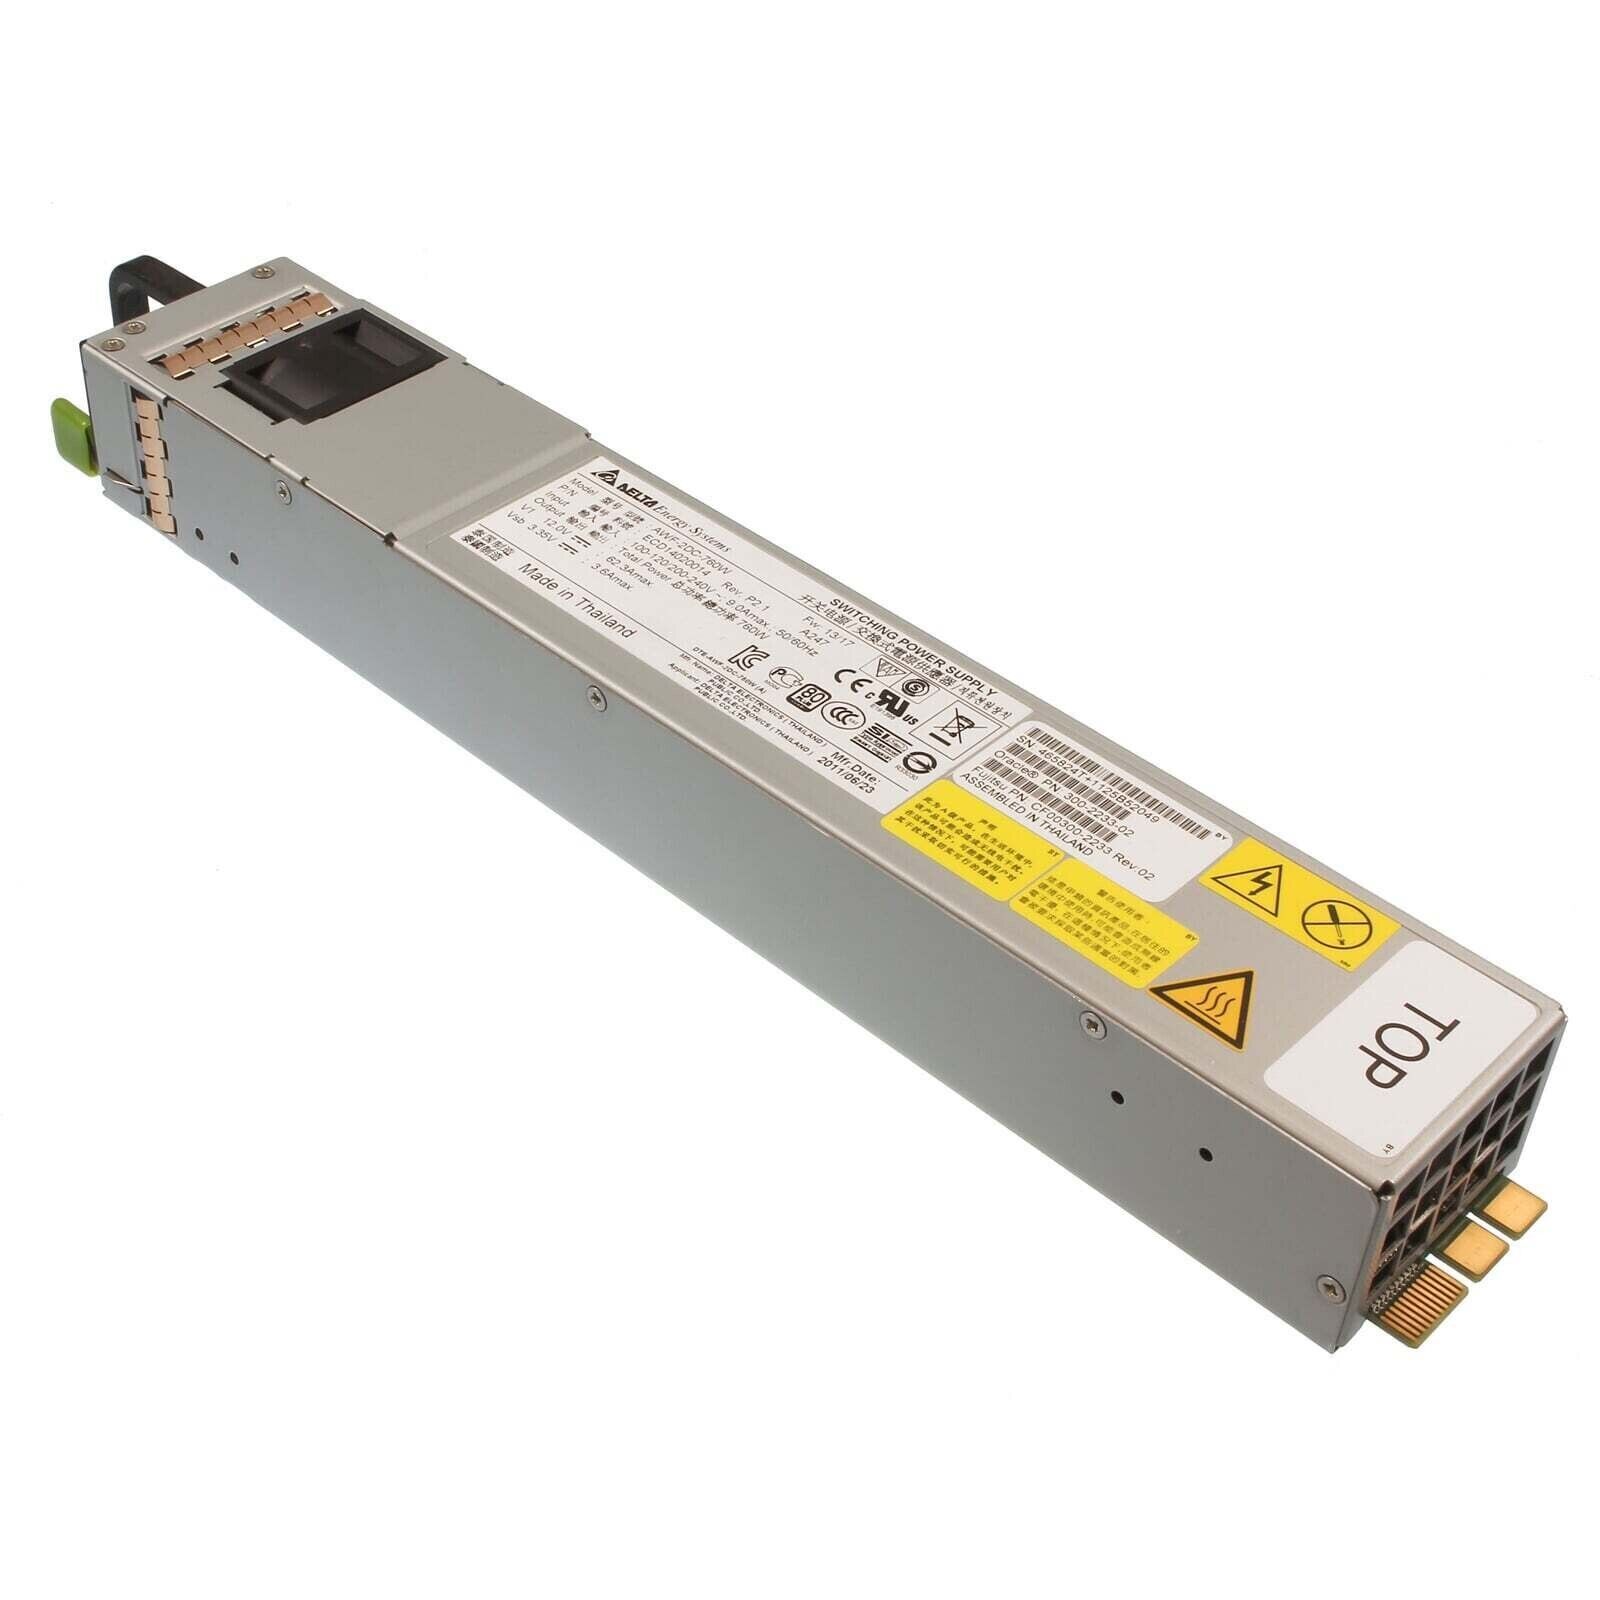 👍 SunFire server Power Supply Delta AWF-2DC-760W PSU SunFire US Seller